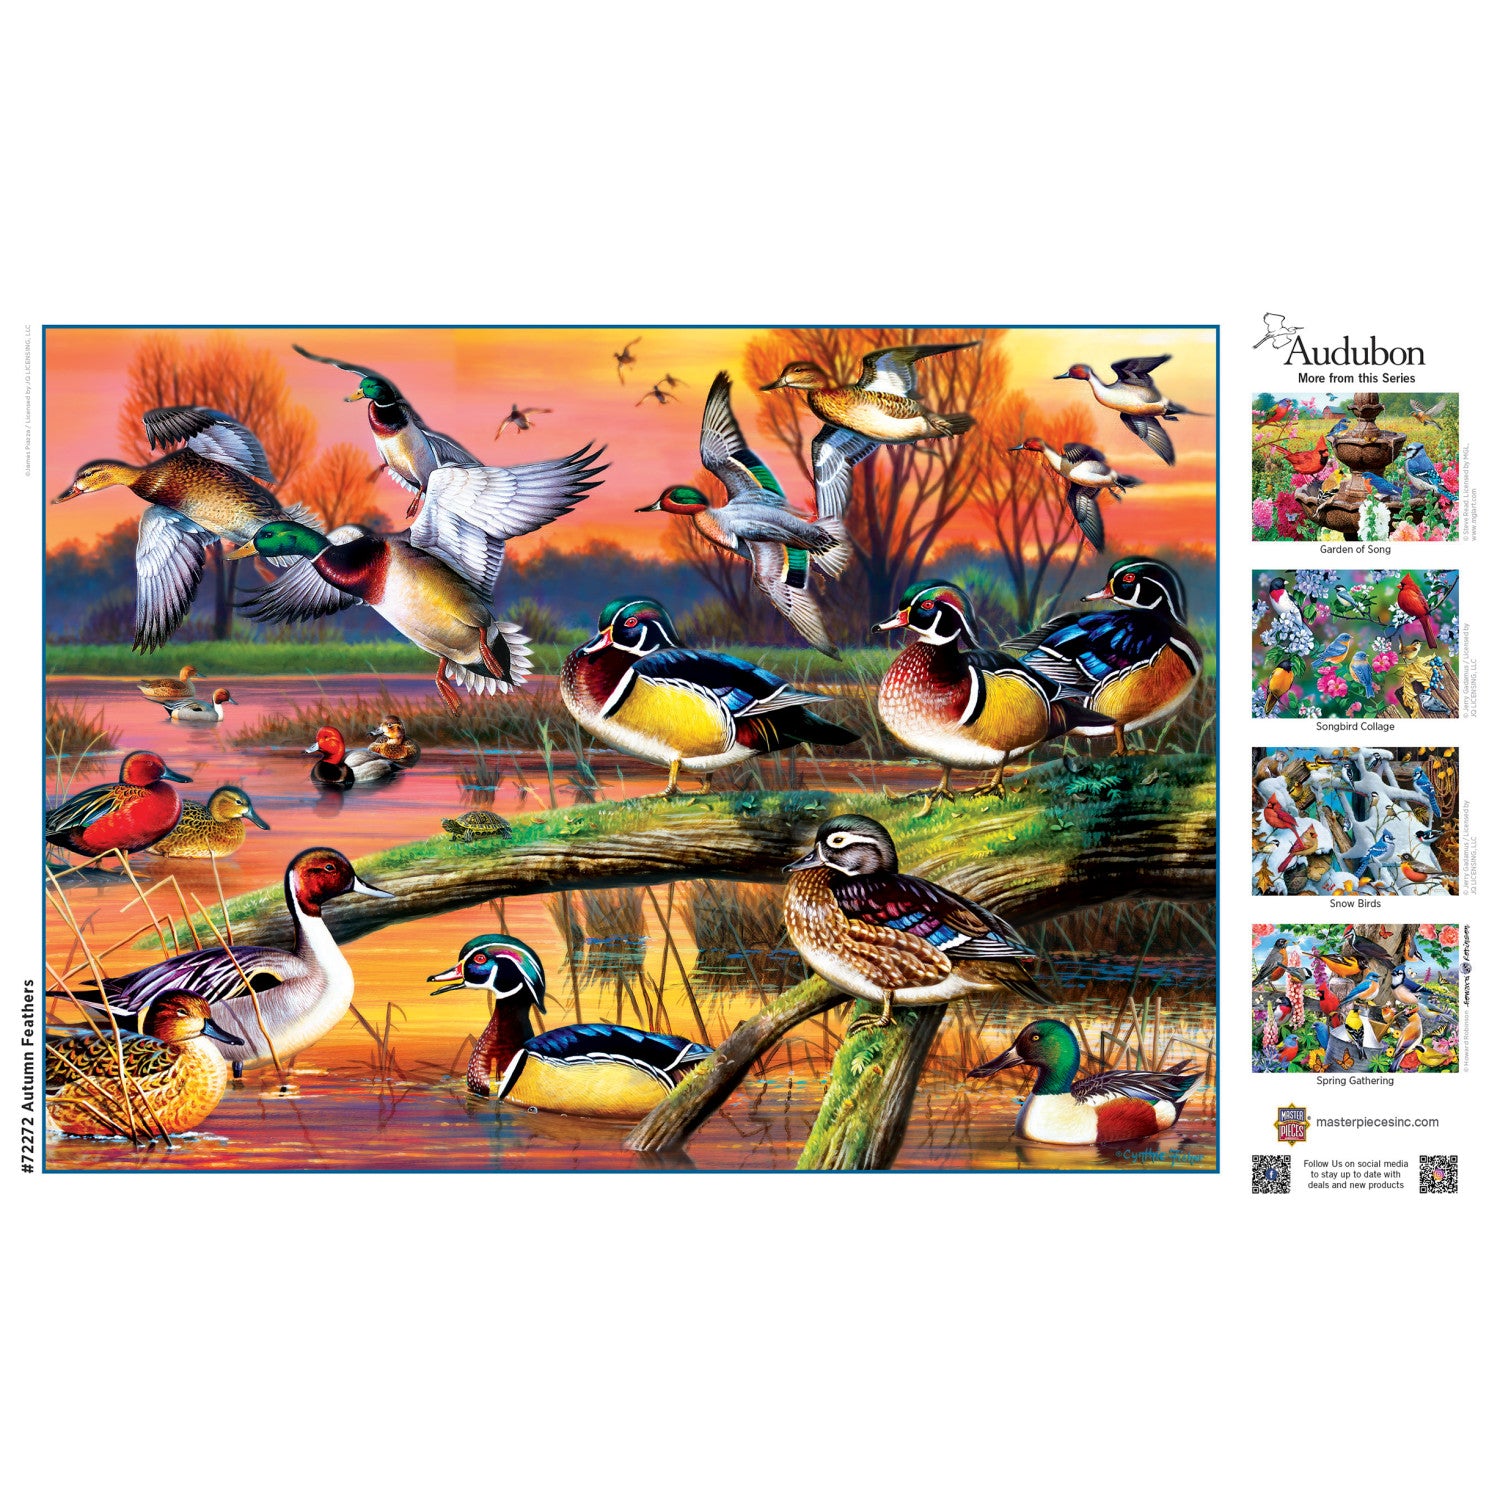 Audubon - Autumn Feathers 1000 Piece Jigsaw Puzzle